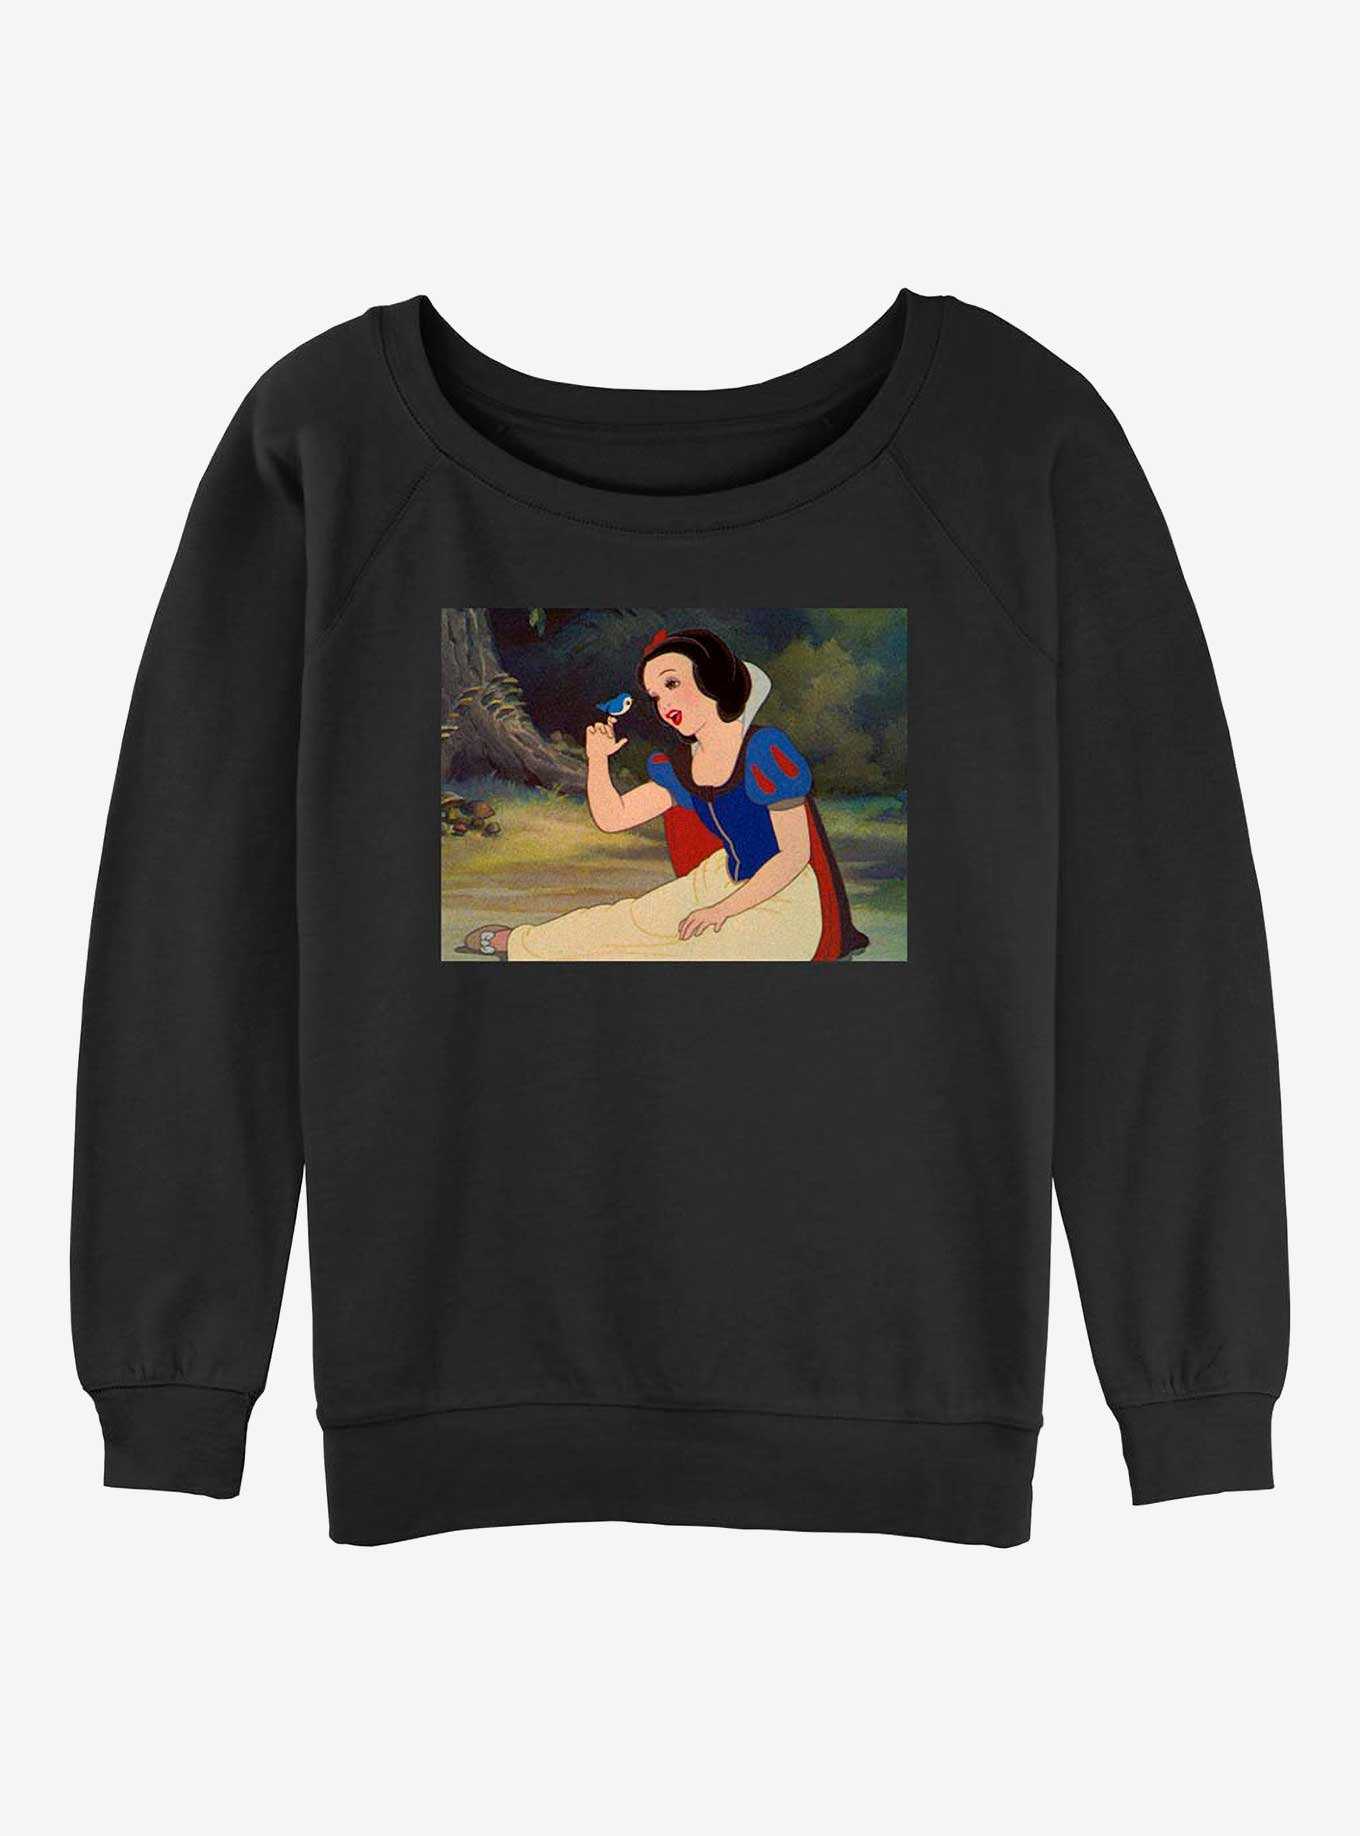 Disney Snow White and the Seven Dwarfs Forest Friend Girls Slouchy Sweatshirt, , hi-res